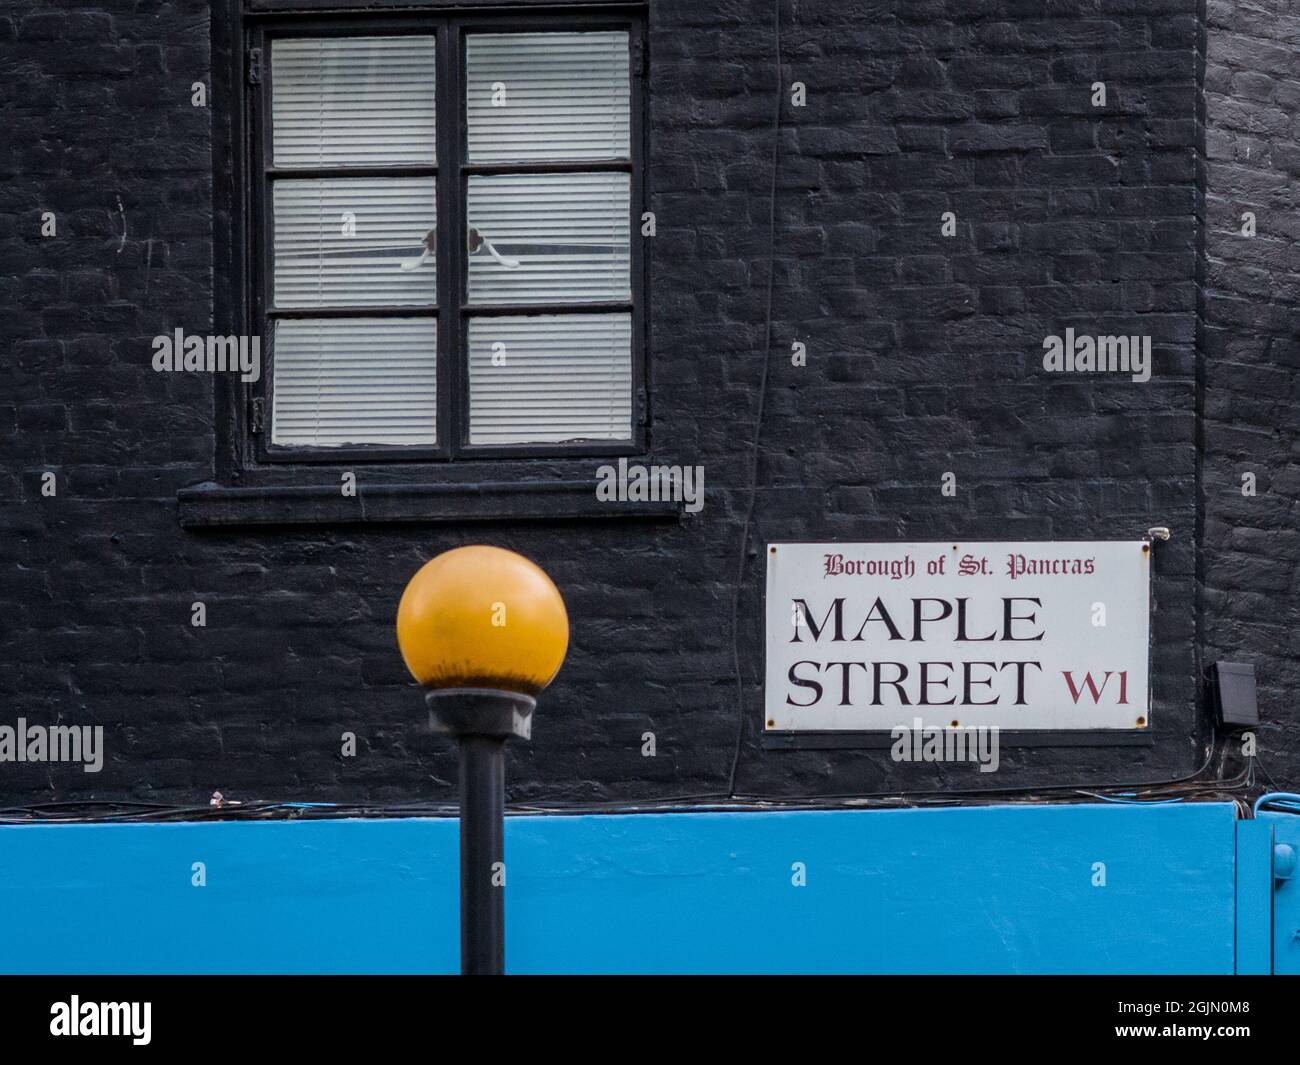 Maple Street Fitzrovia London - Maple St Sign - London Street Signs - Vintage London Street Sign - Maple Street W1 Borough of St Pancras Foto Stock